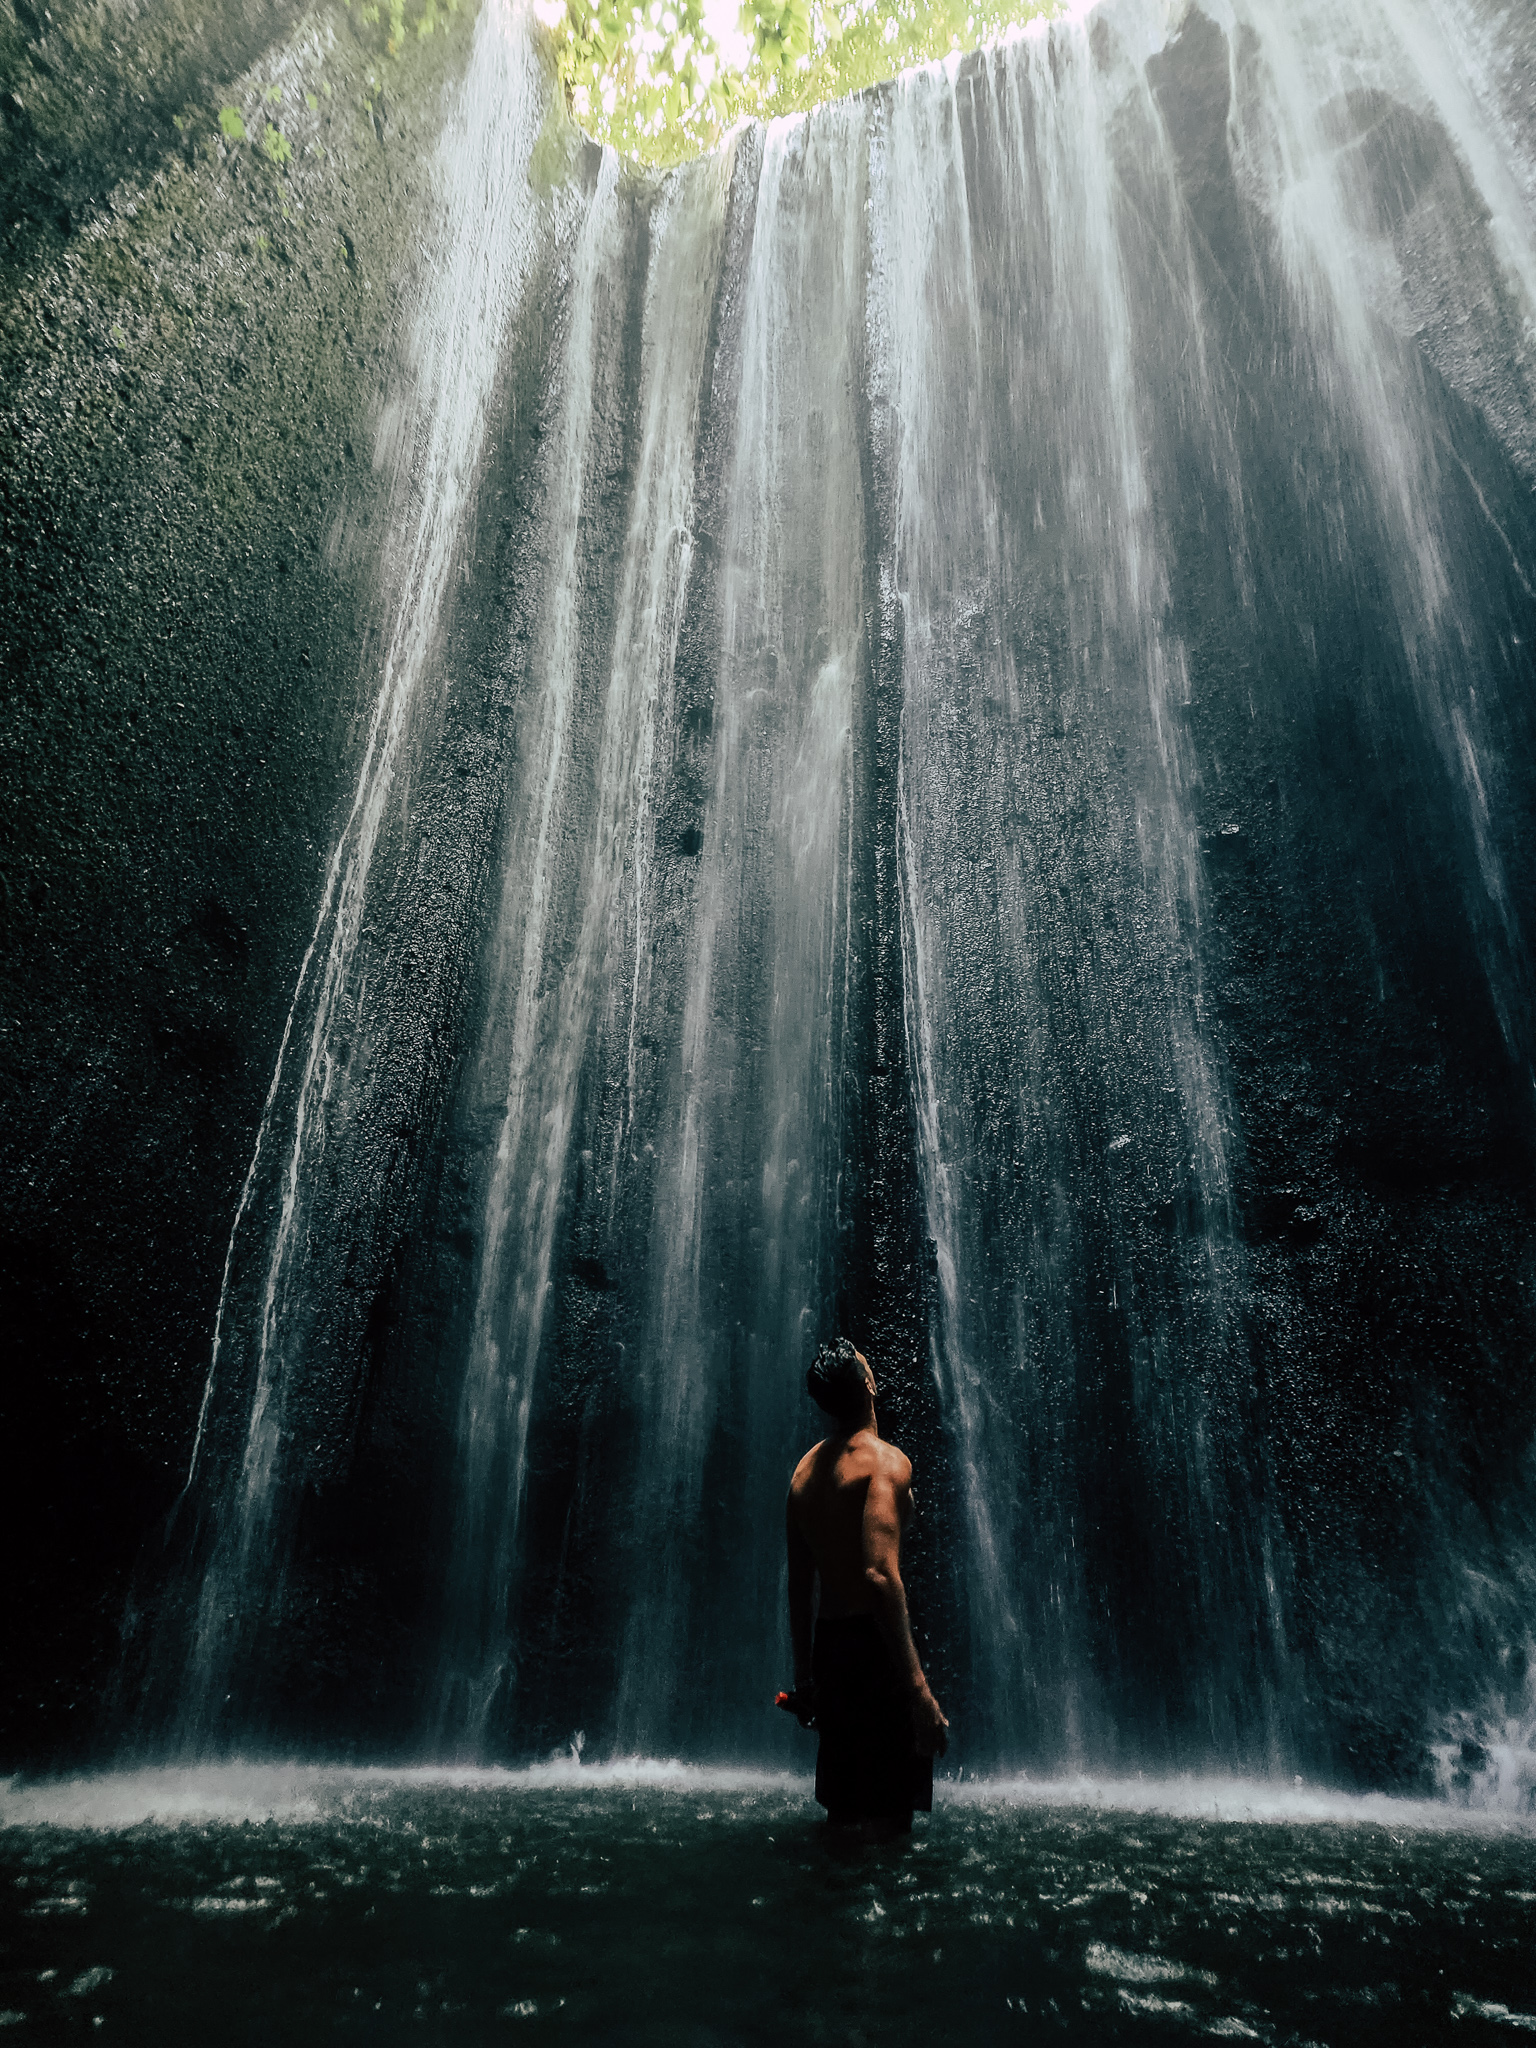 ubud waterfalls day trip tukad cepung waterfall